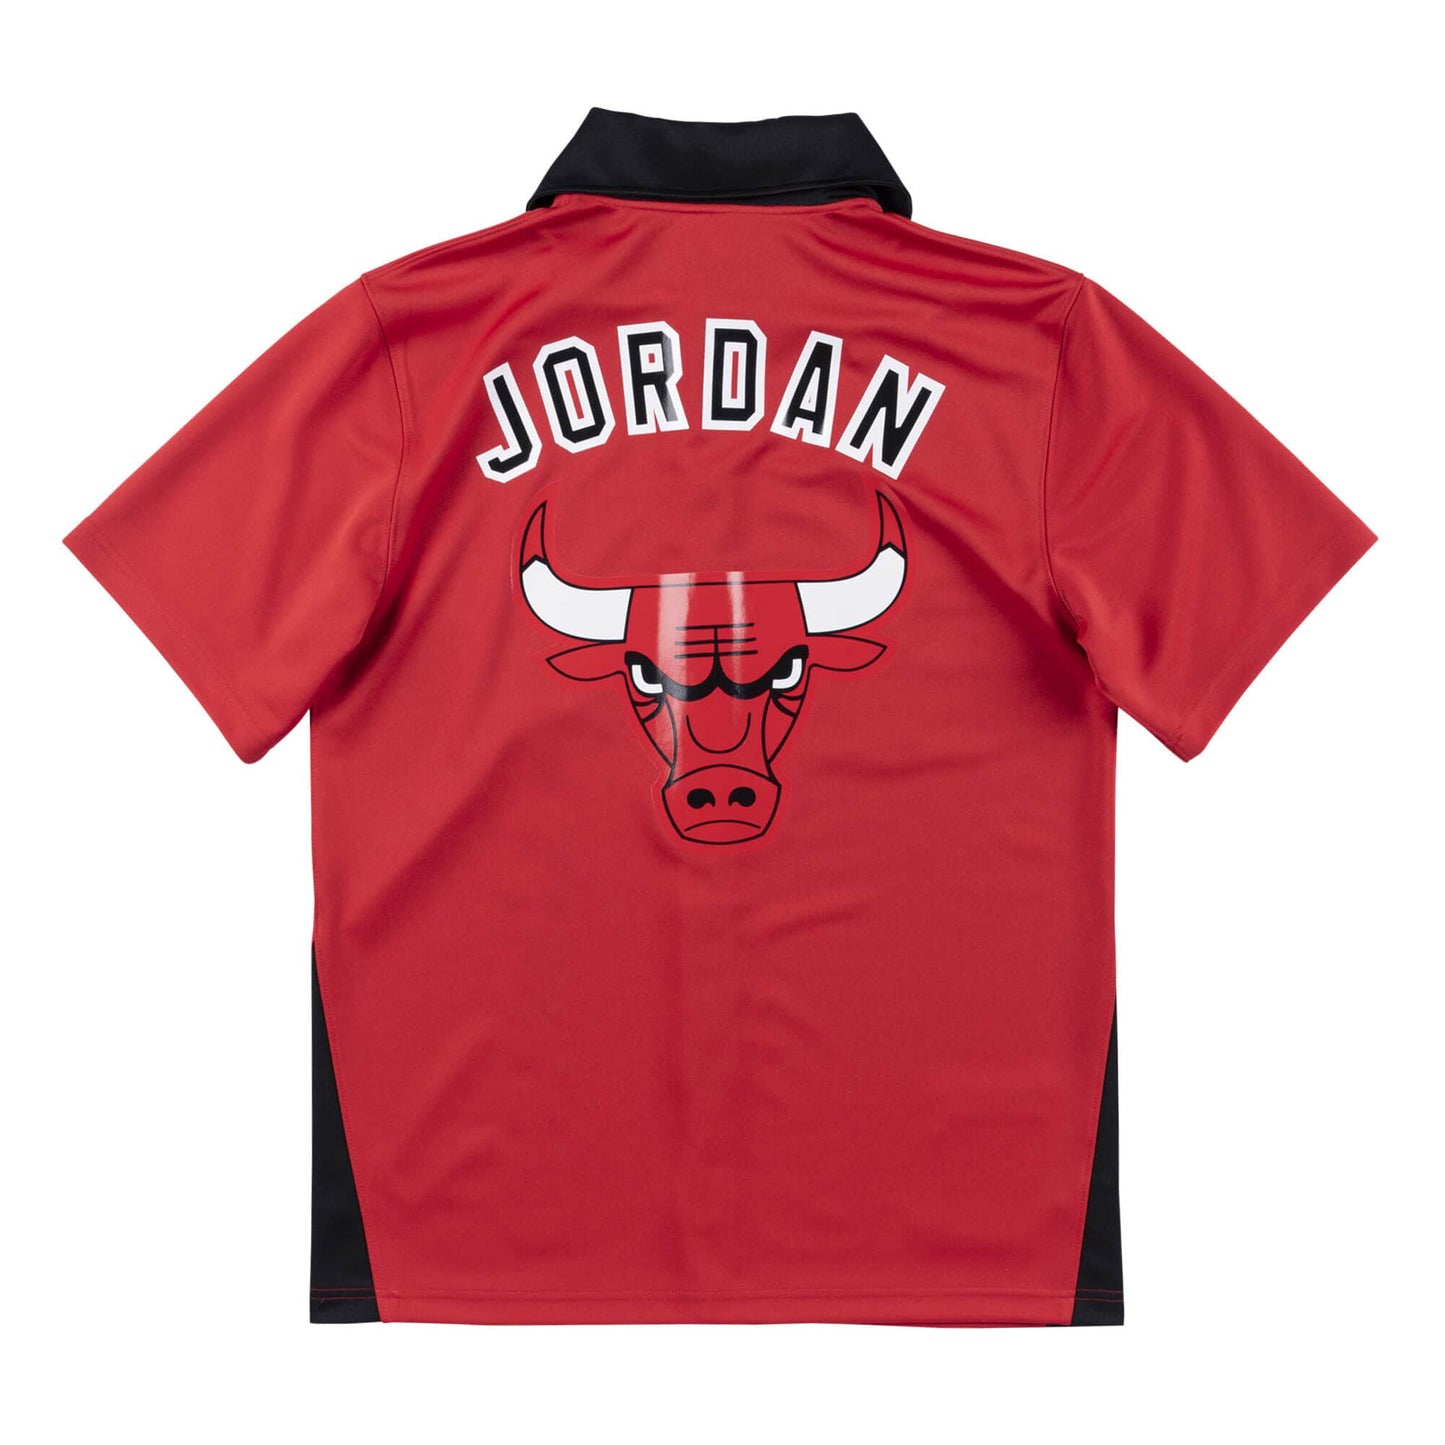 Authentic Shooting Shirt Chicago Bulls 1984-85 Michael Jordan